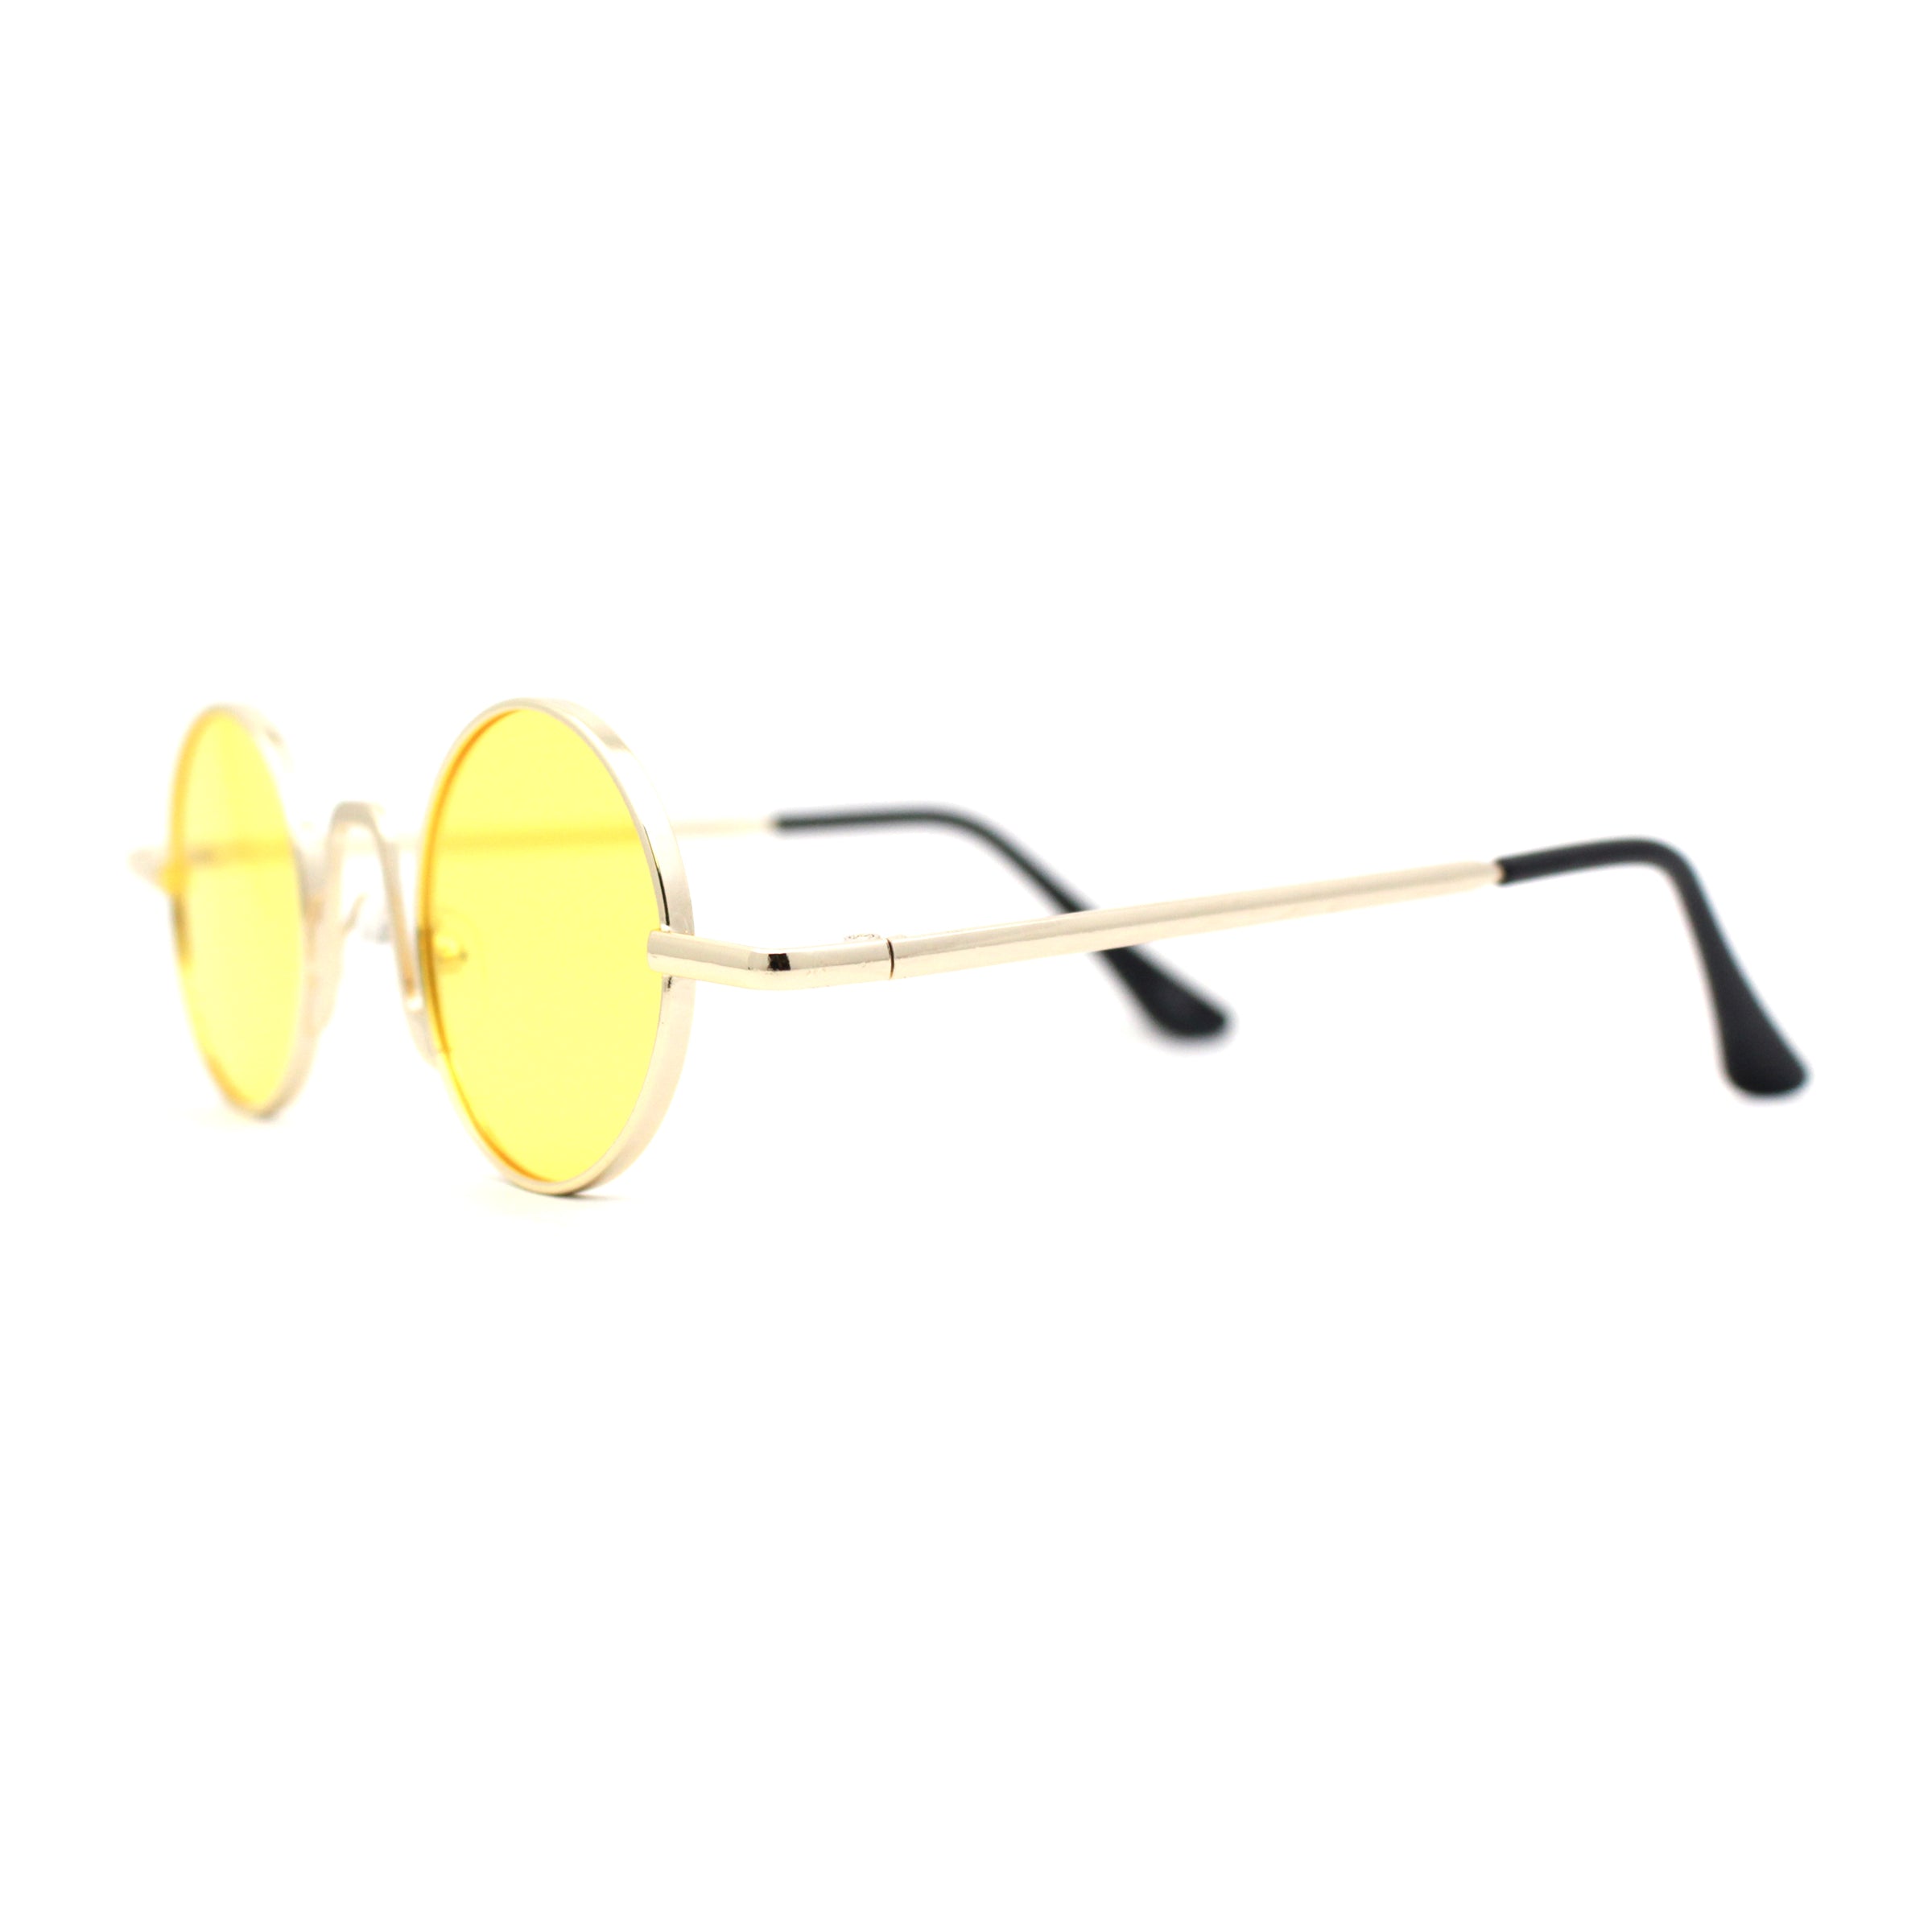 Retro Stoner Pimp Micro Round Circle Pop Color Lens Sunglasses Gold Brown 